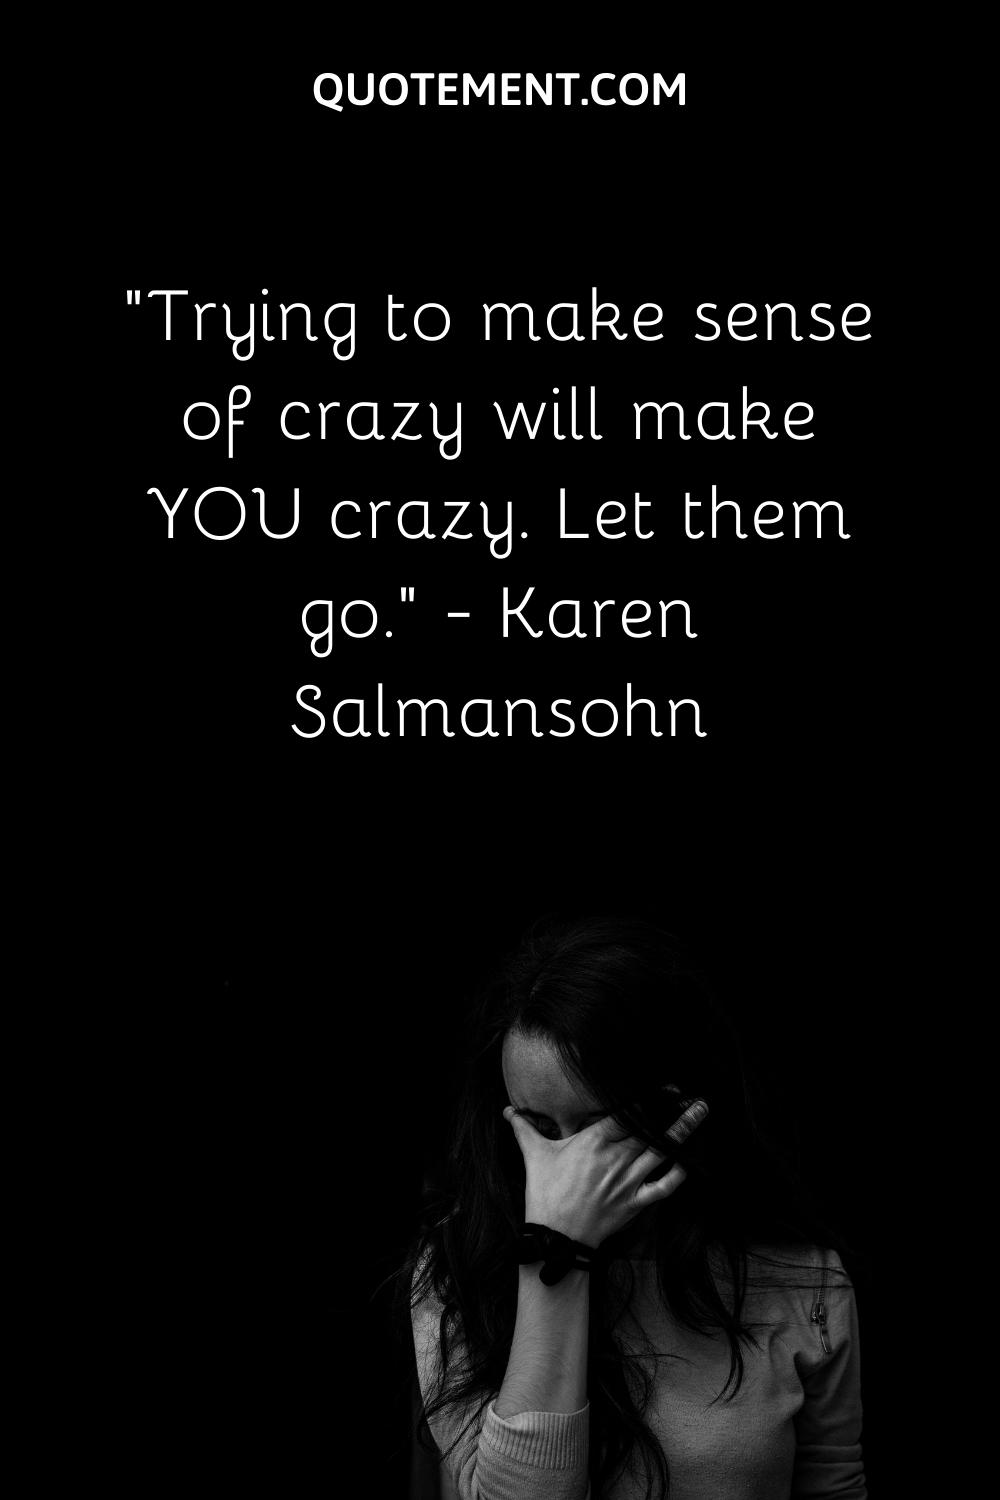 Trying to make sense of crazy will make YOU crazy